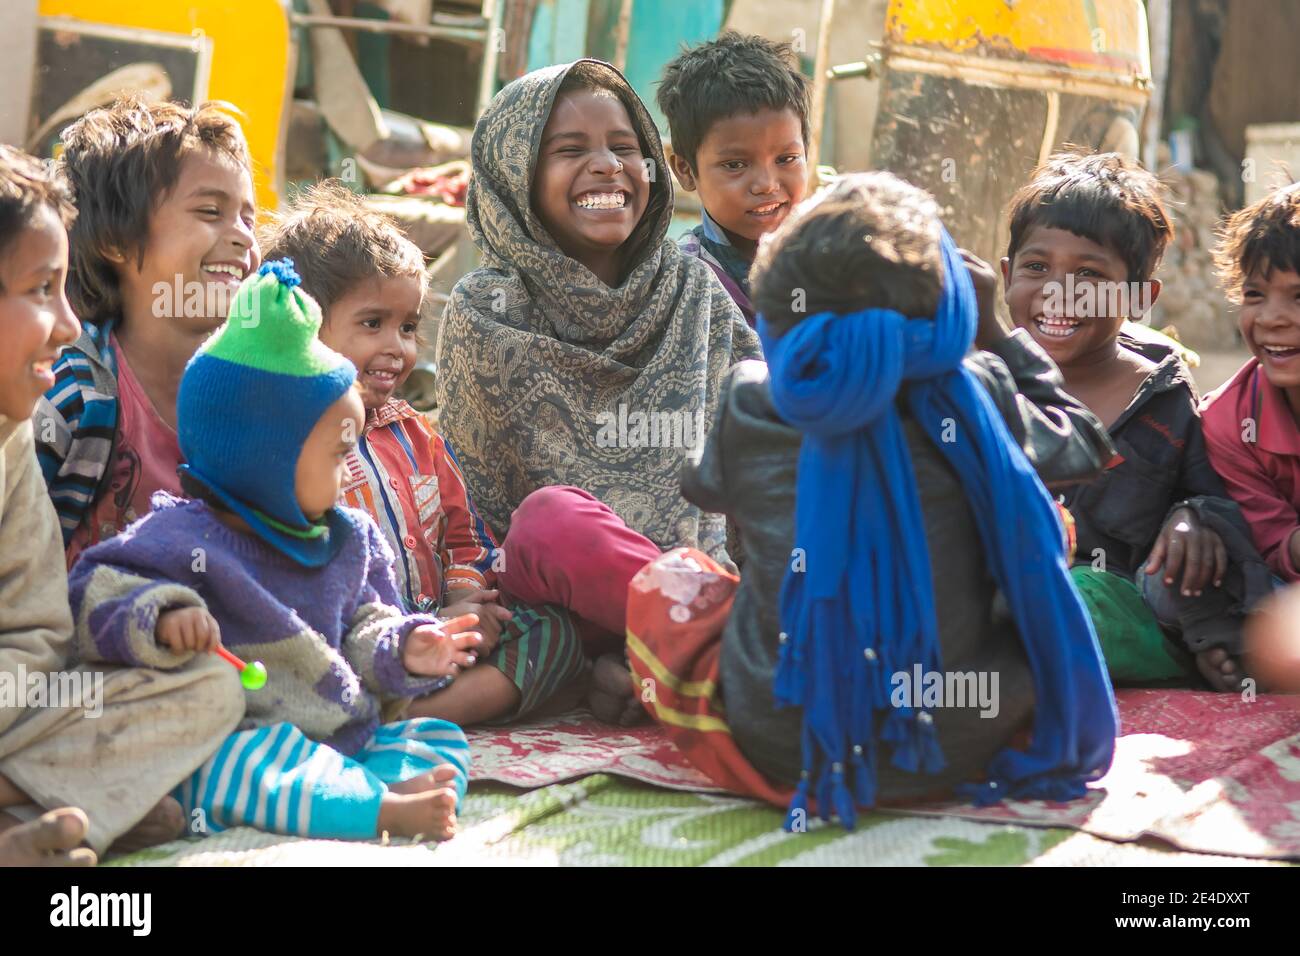 Rajasthan India 07 02 2018 Group Of Children Enjoying And Laughing